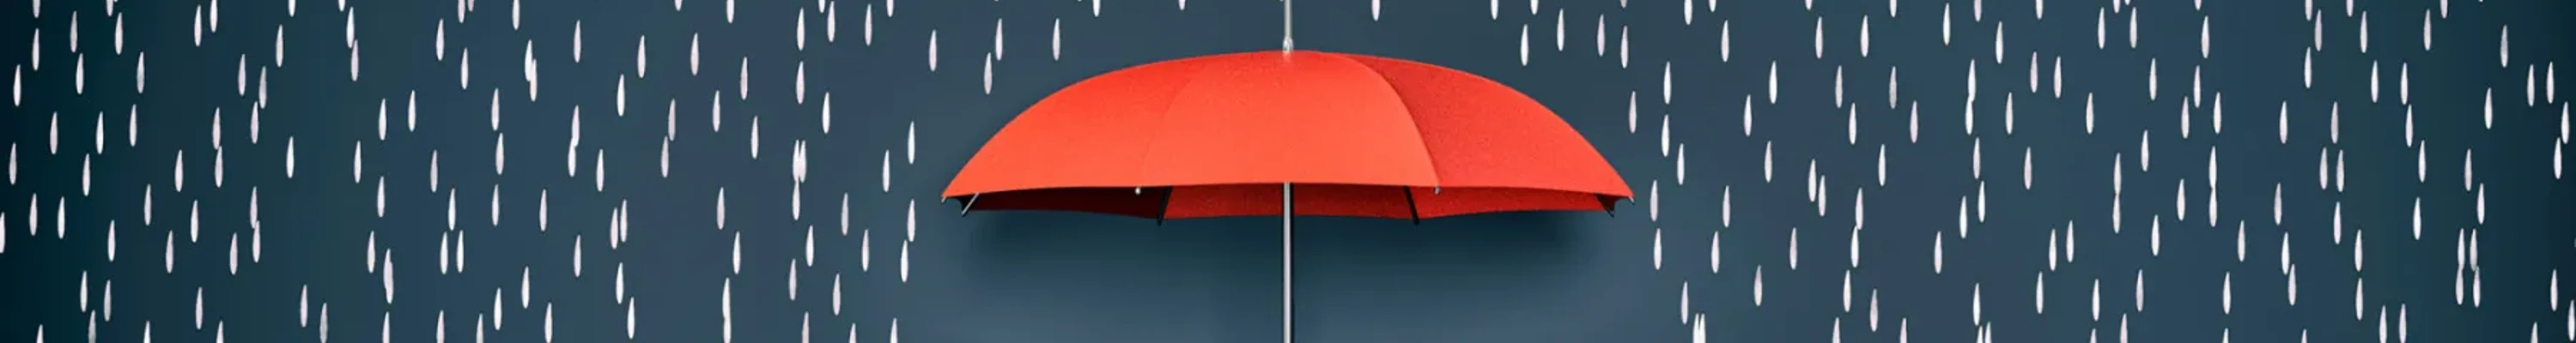 Open Umbrella in rain